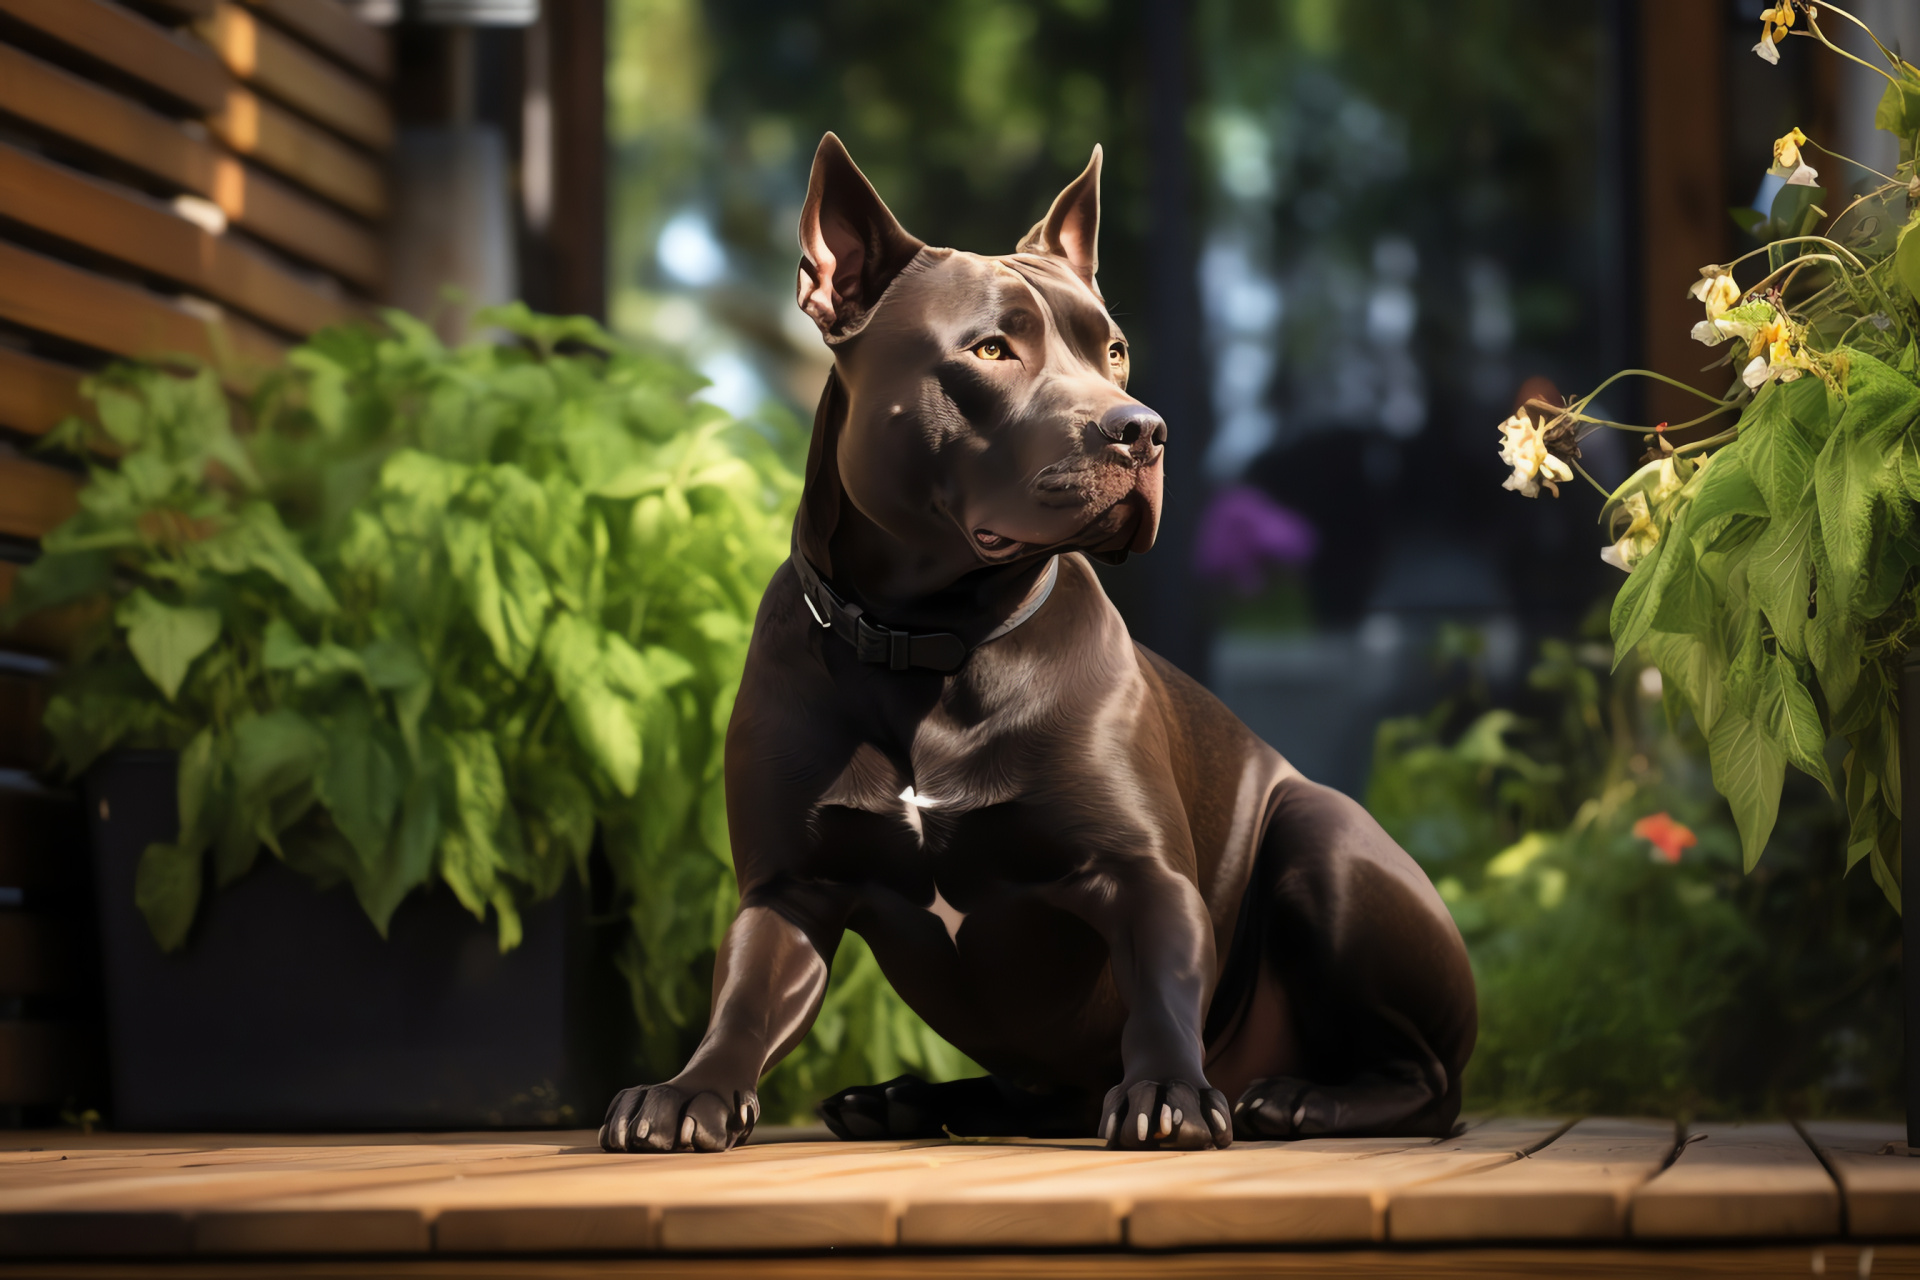 Backyard Pitbull setting, Pitbull guard stance, Lush garden dog, Pitbull canine appearance, Outdoor Pitbull, HD Desktop Image